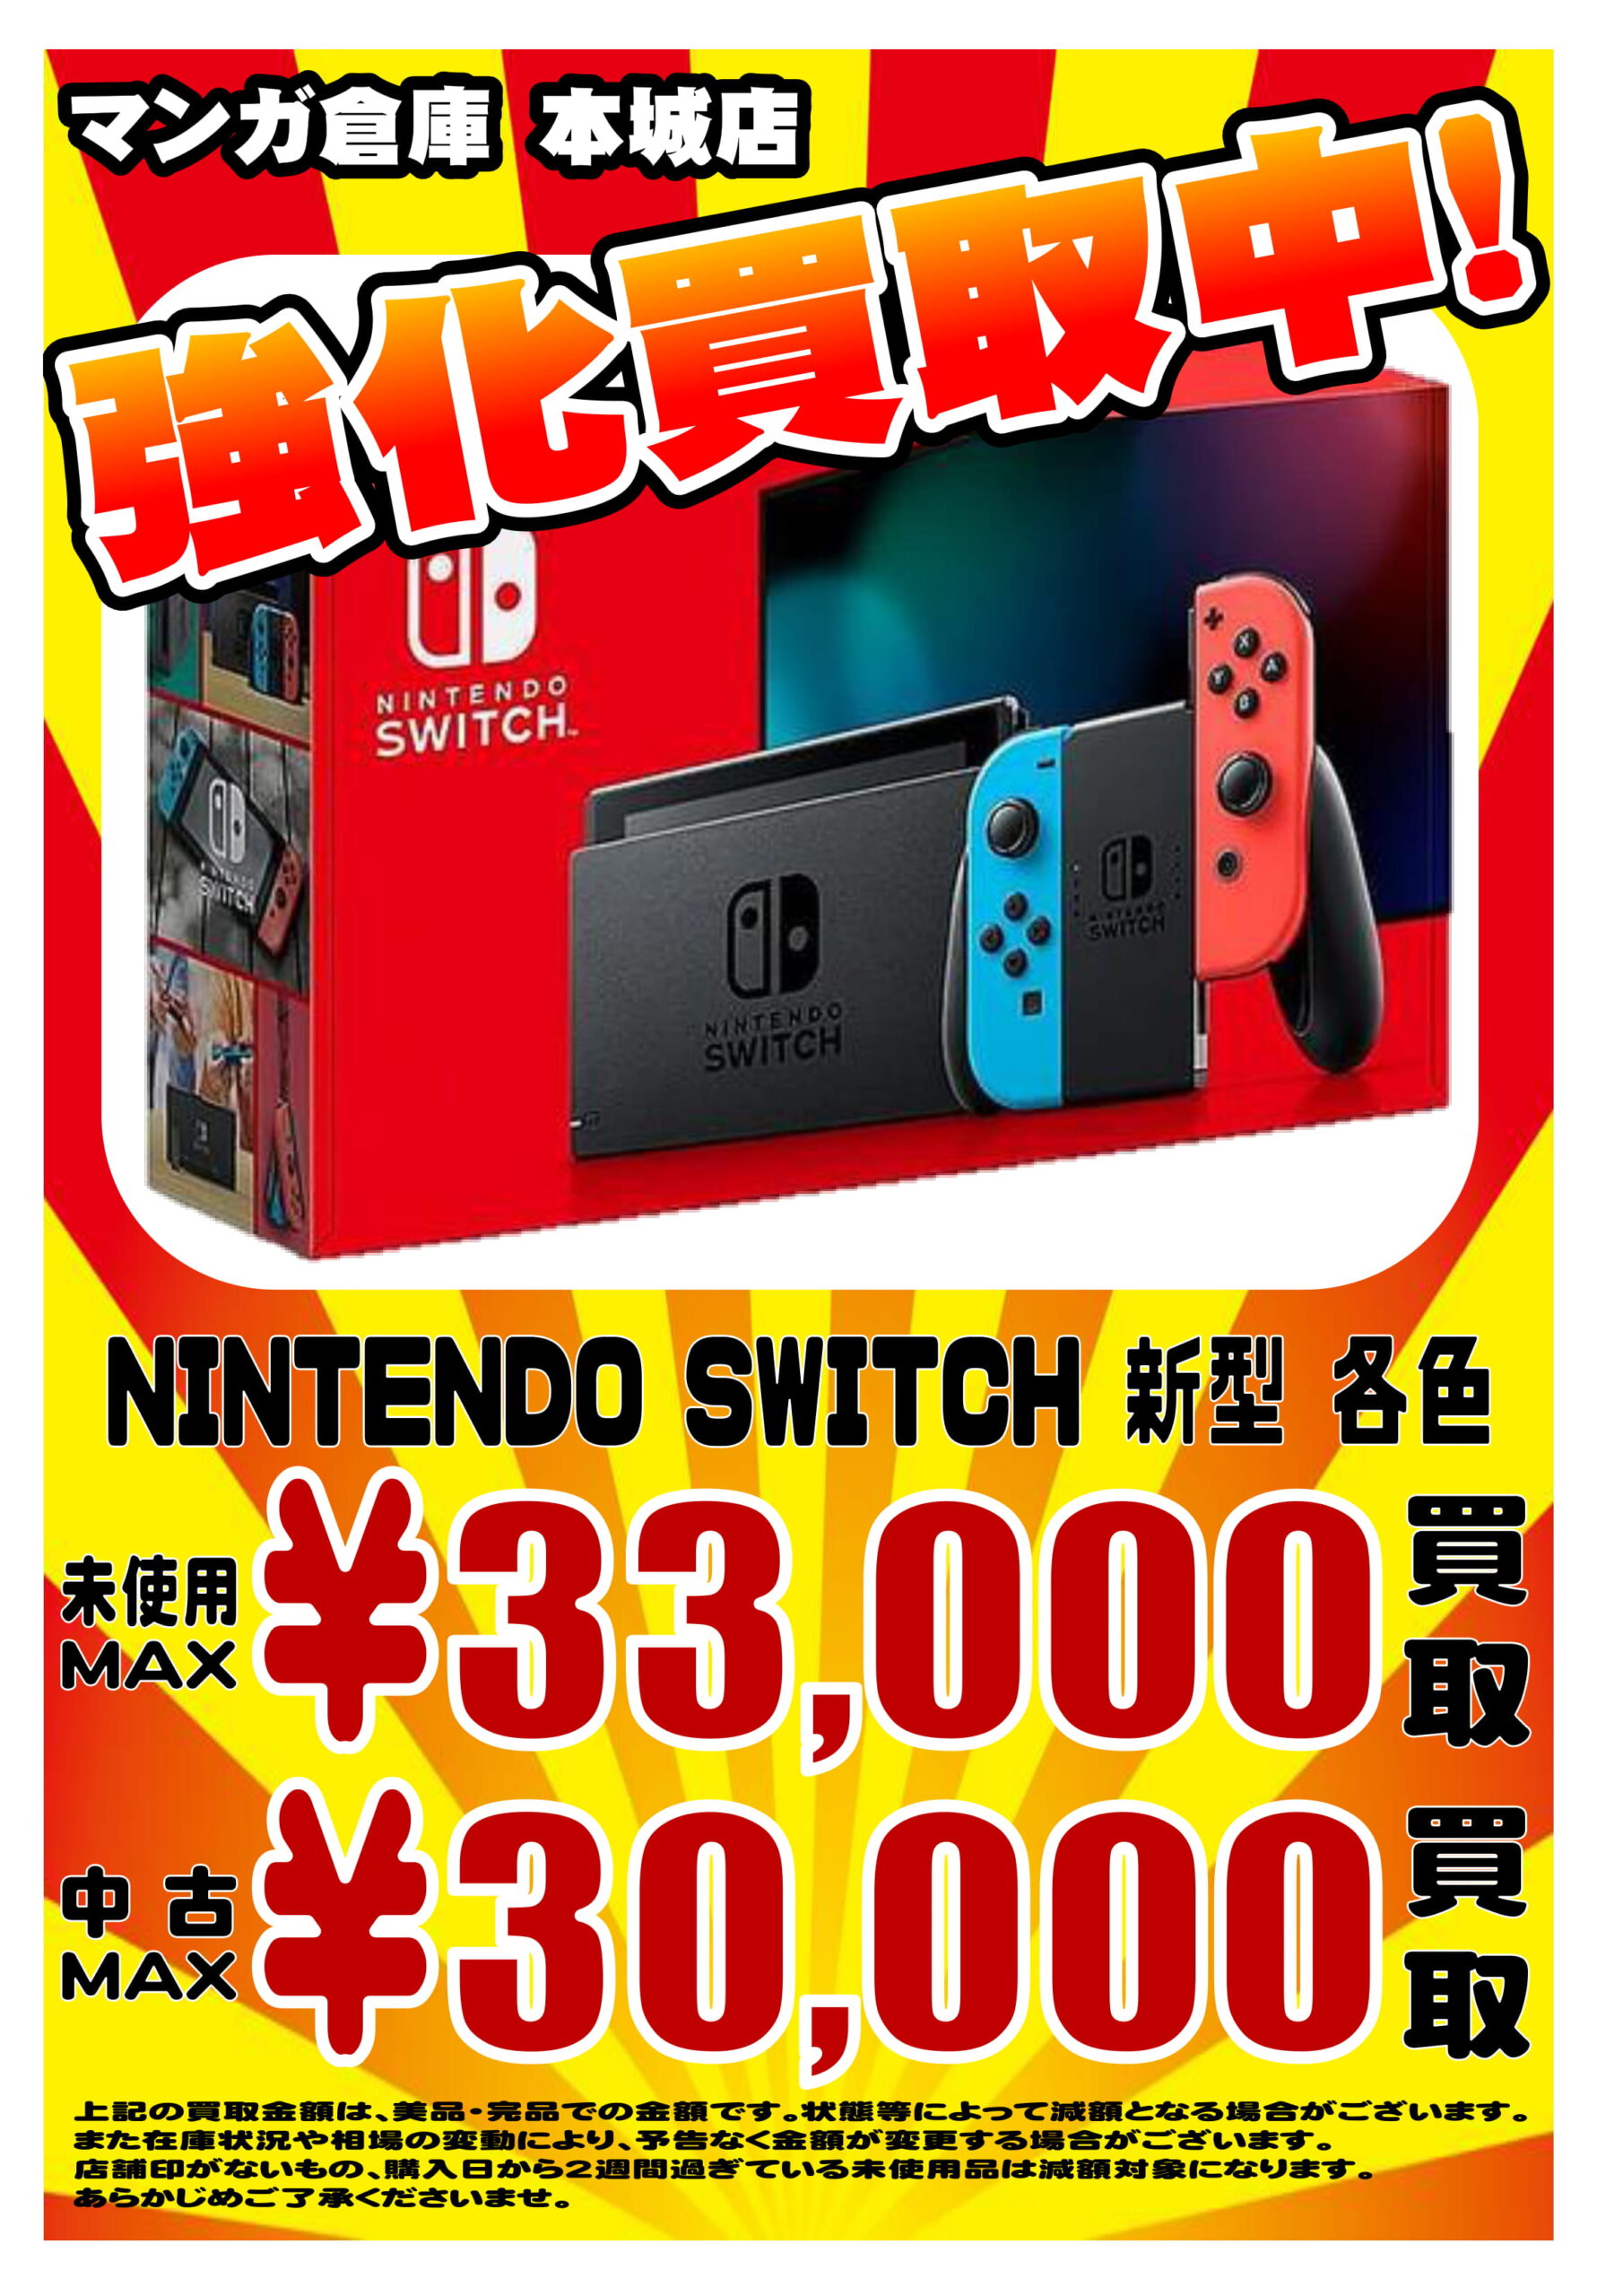 Nintendo Switch - 【週末限定価格】Nintendo Switch Lite 本体